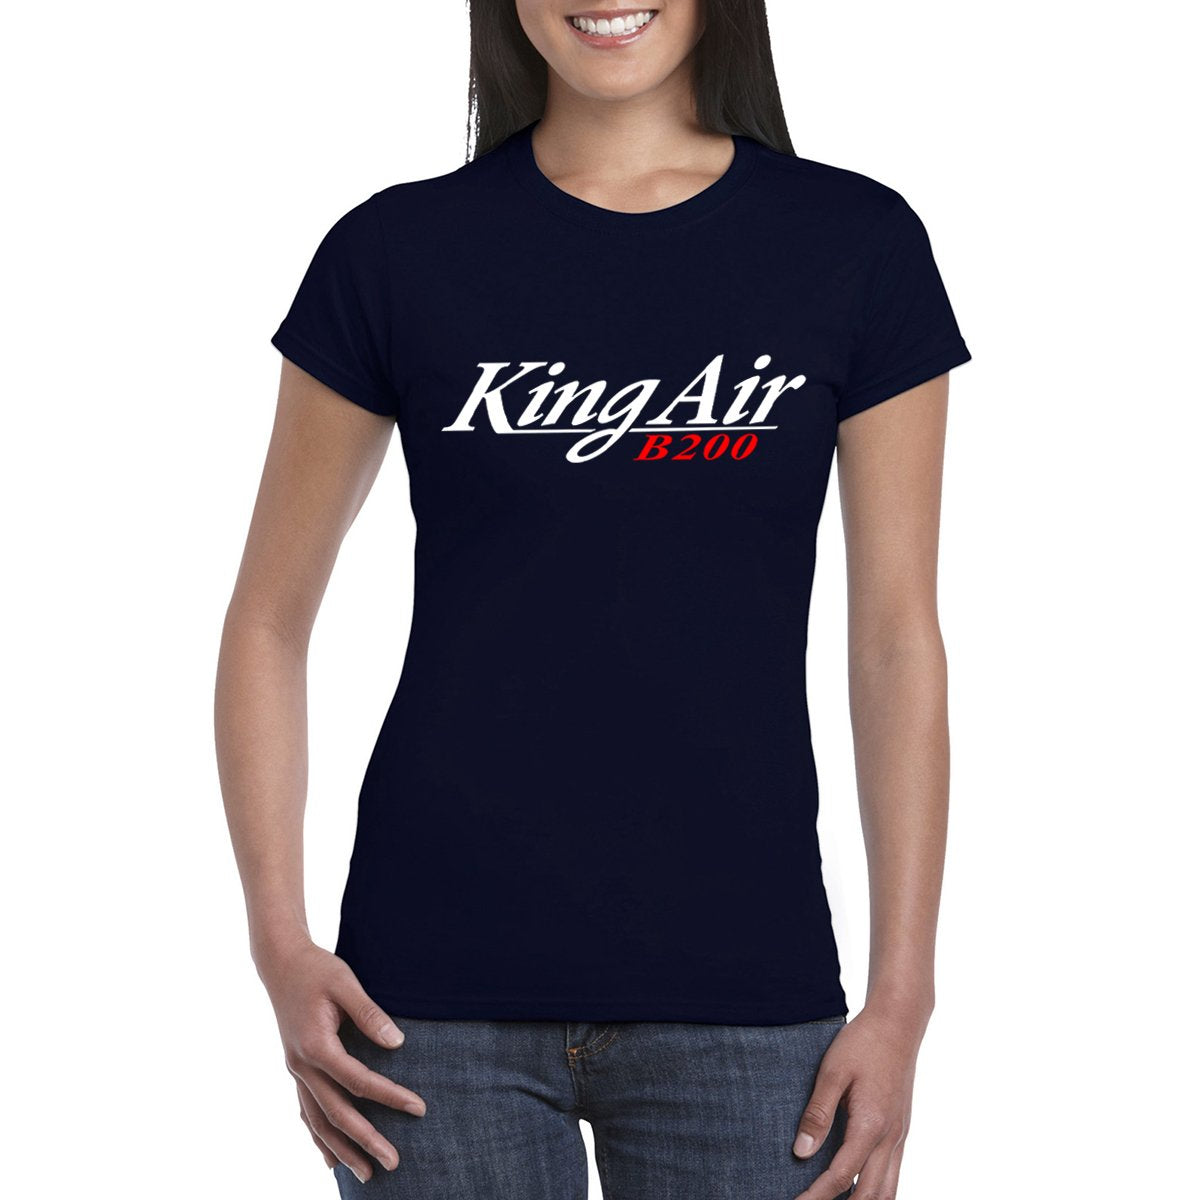 KING AIR B200 Women's T-Shirt